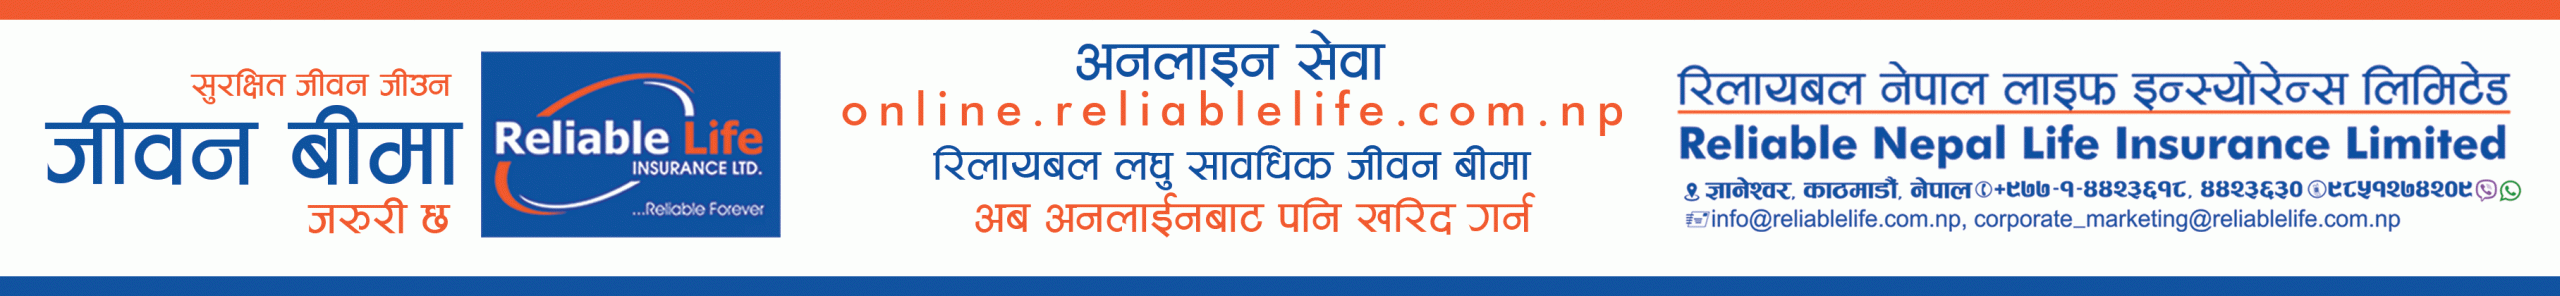 Reliable Nepal life